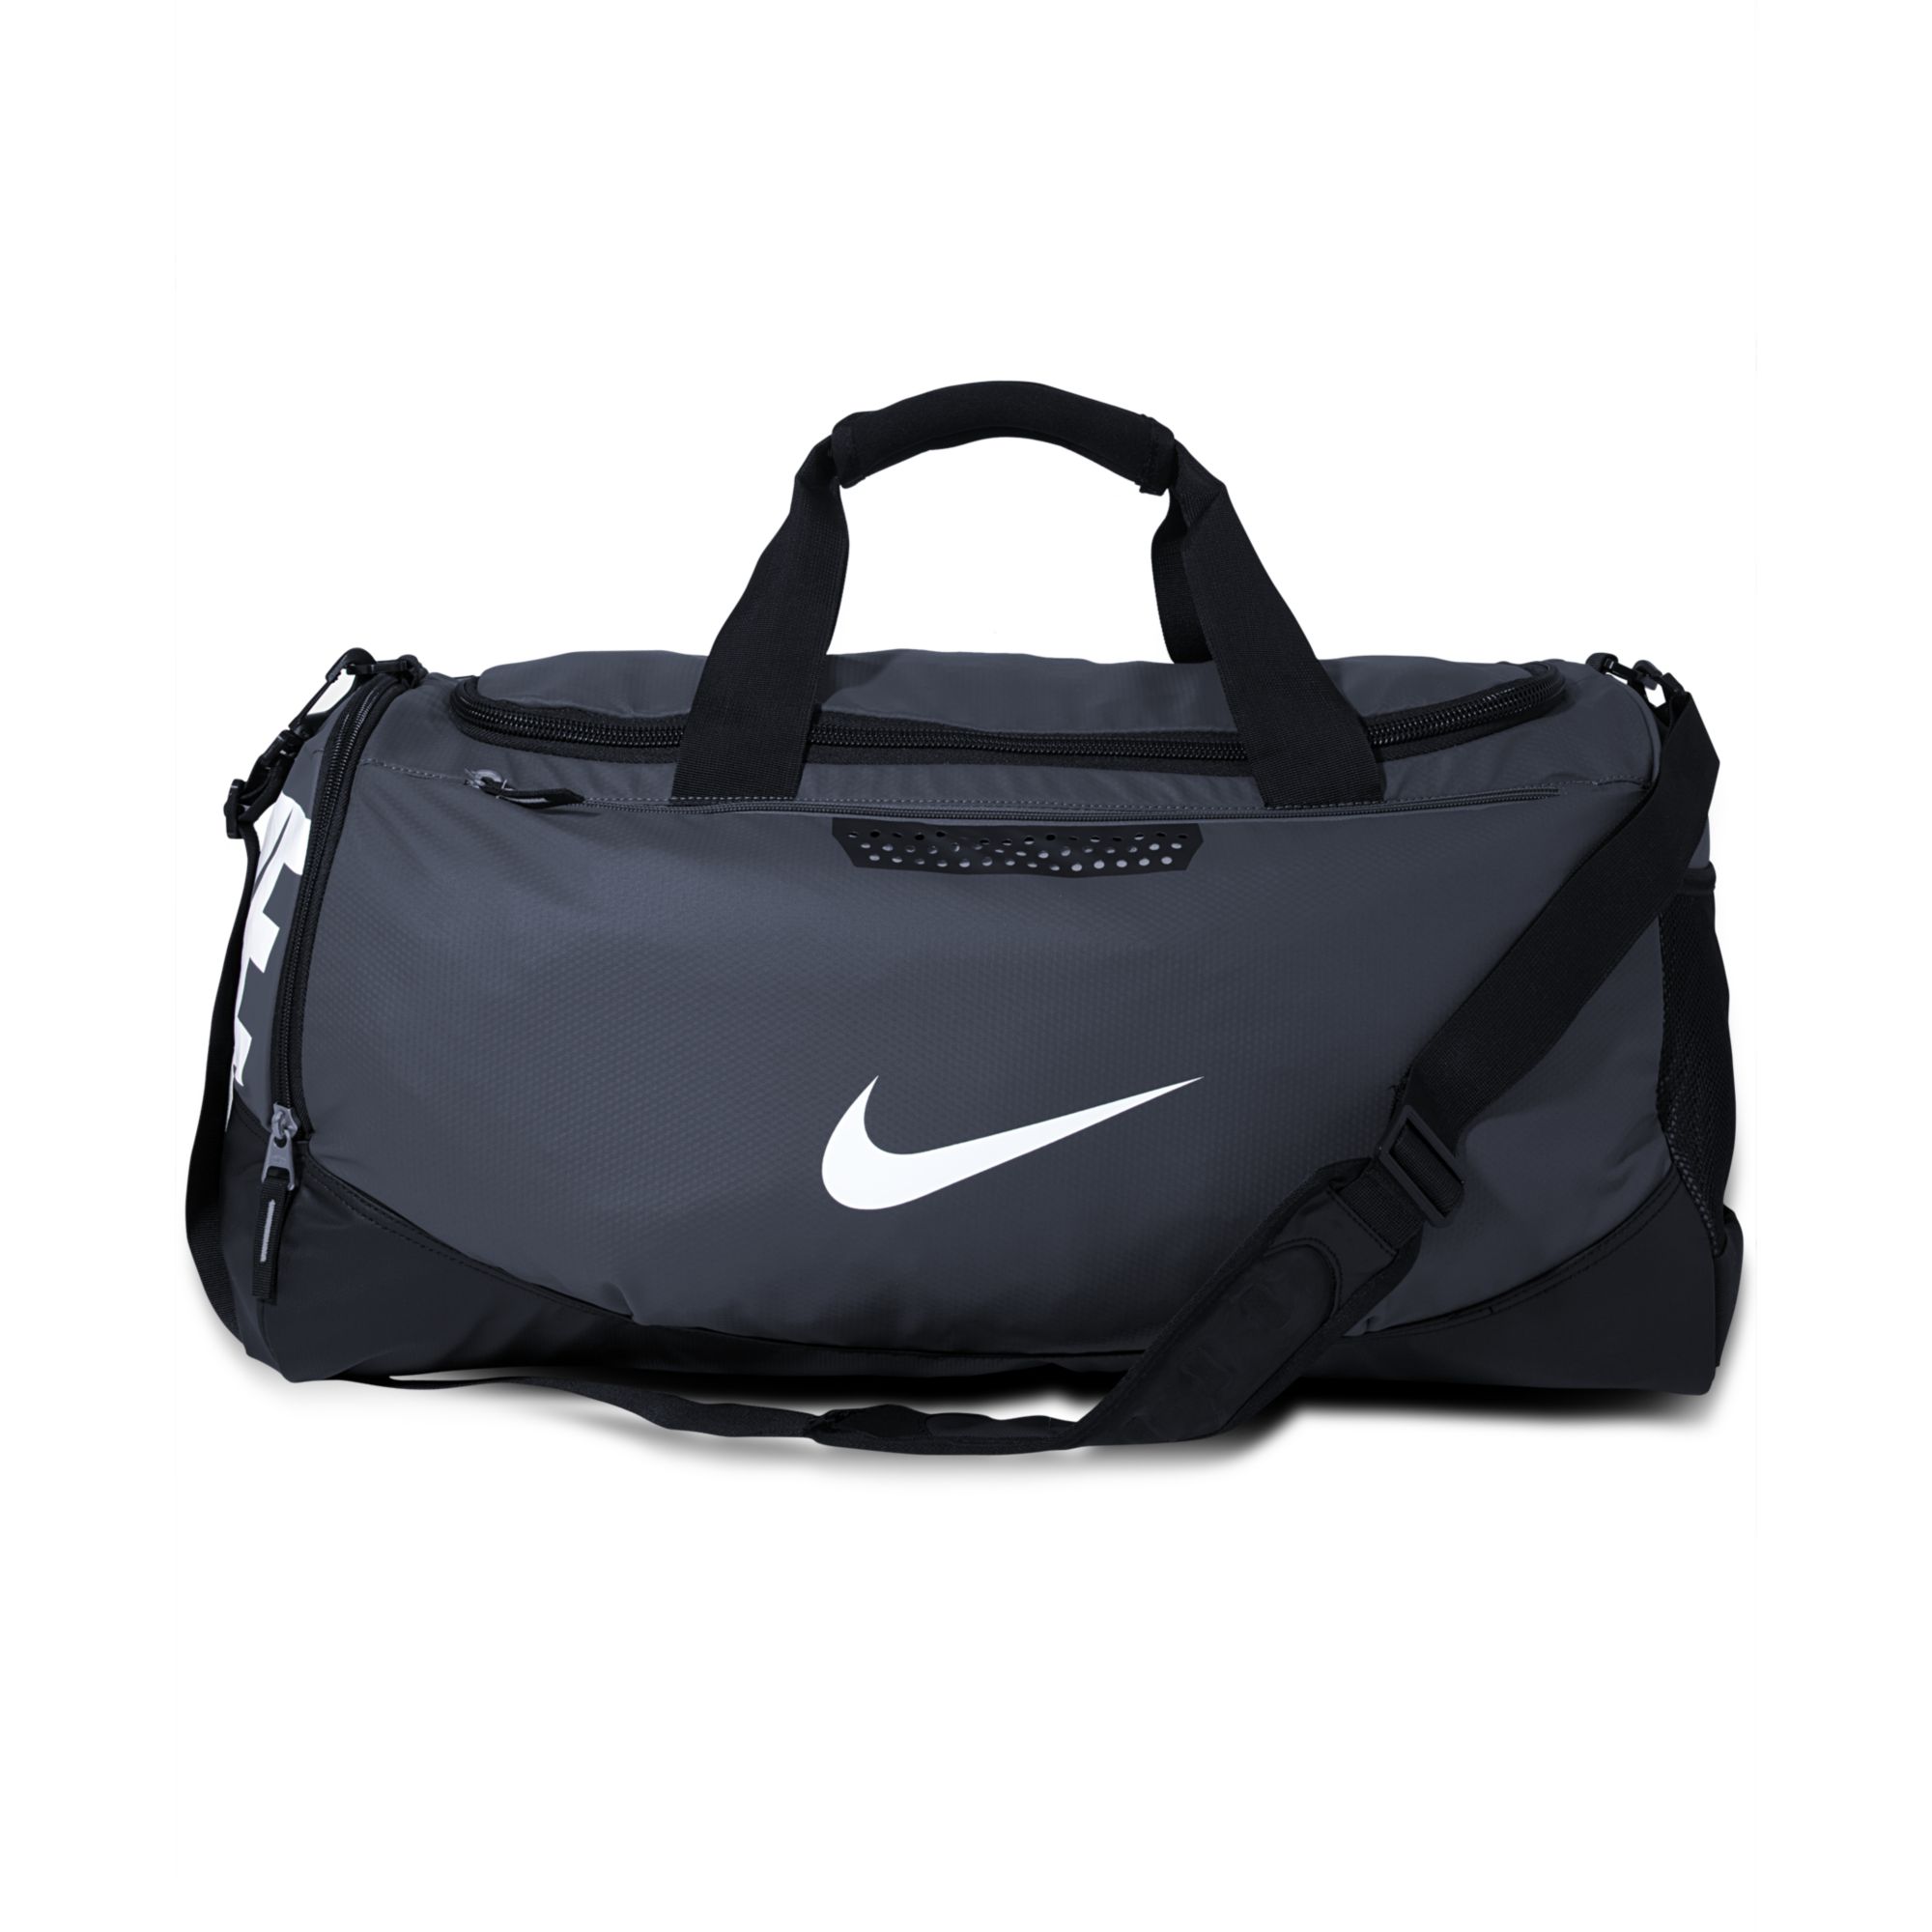 Lyst - Nike Water Resistant Team Training Medium Duffle Bag in Blue for Men